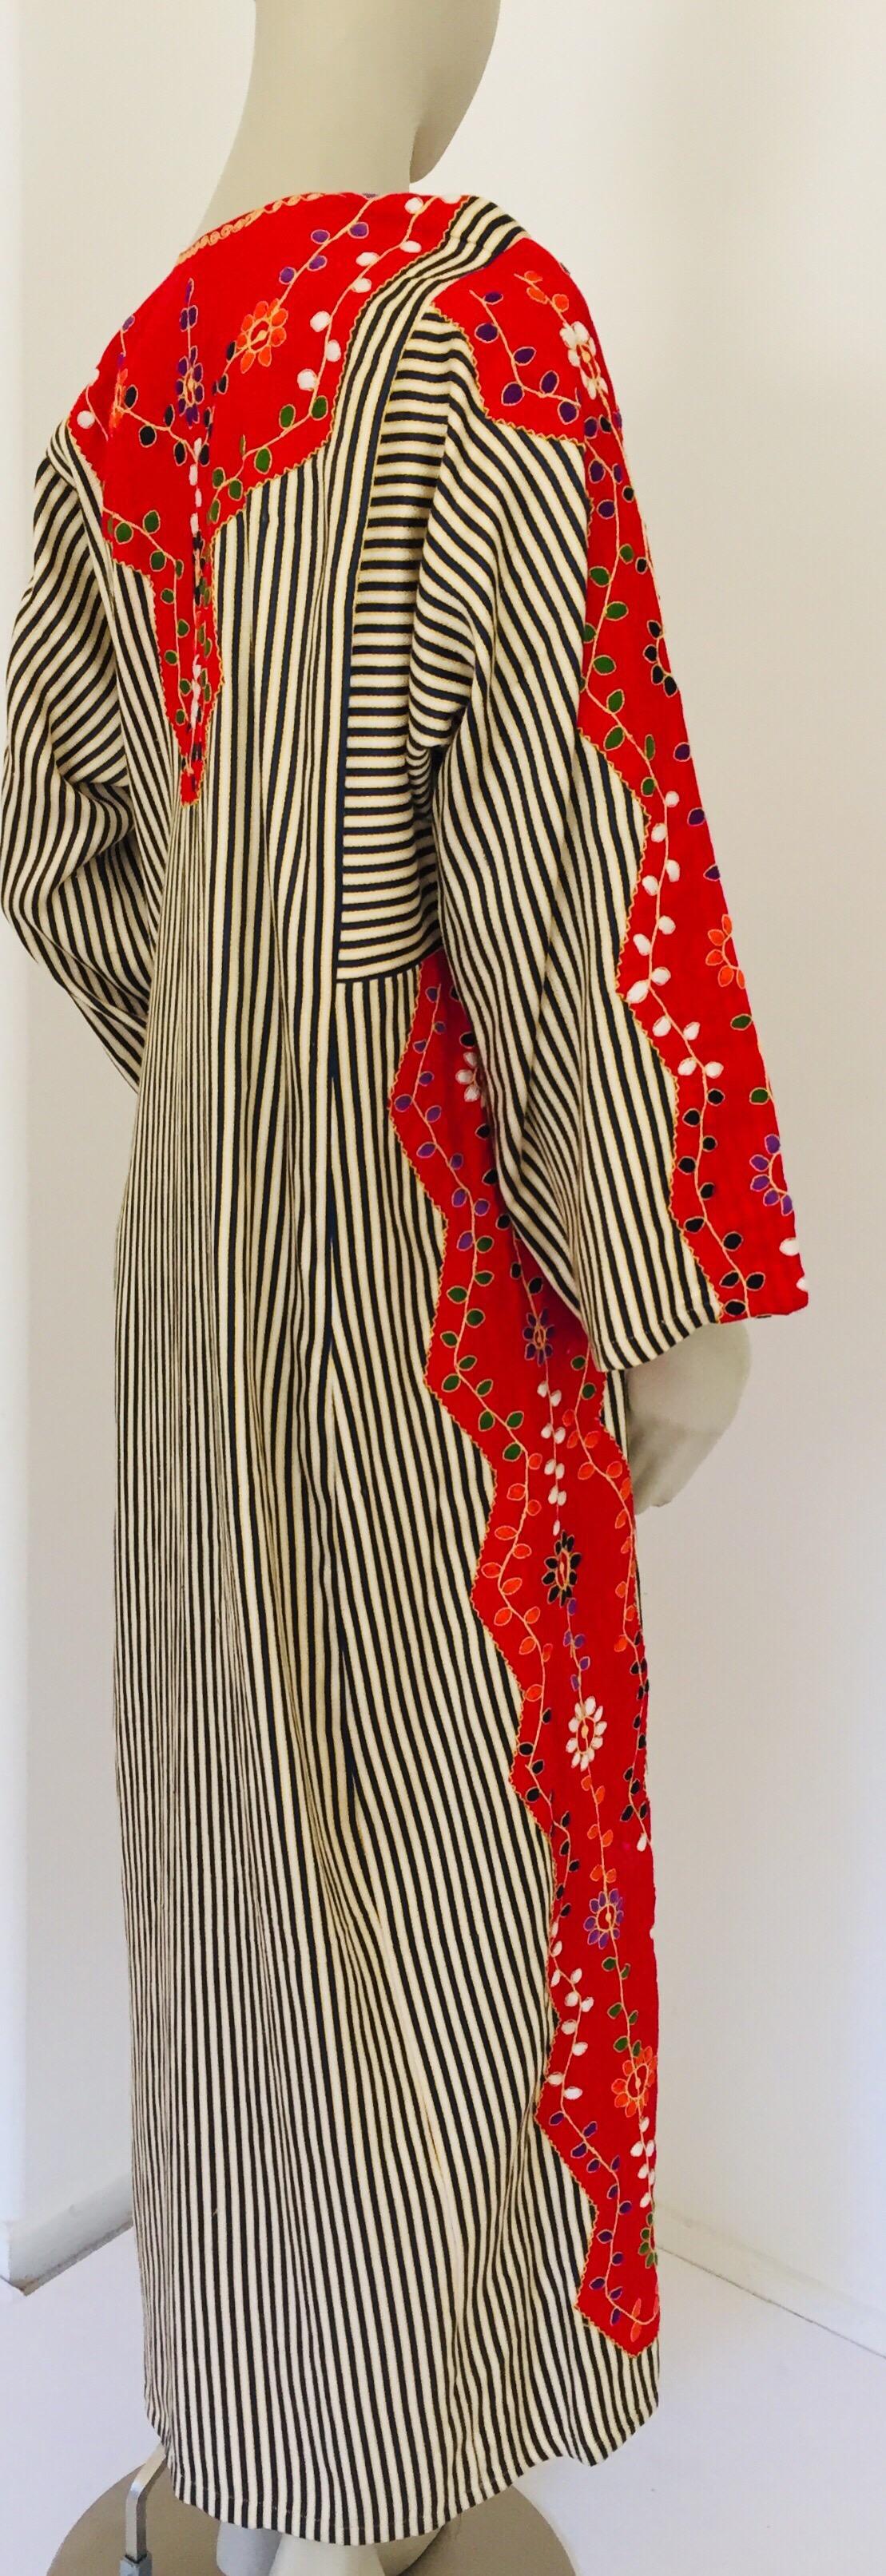 Vintage Middle Eastern Ethnic Caftan Moroccan Kaftan Maxi Dress For Sale 4